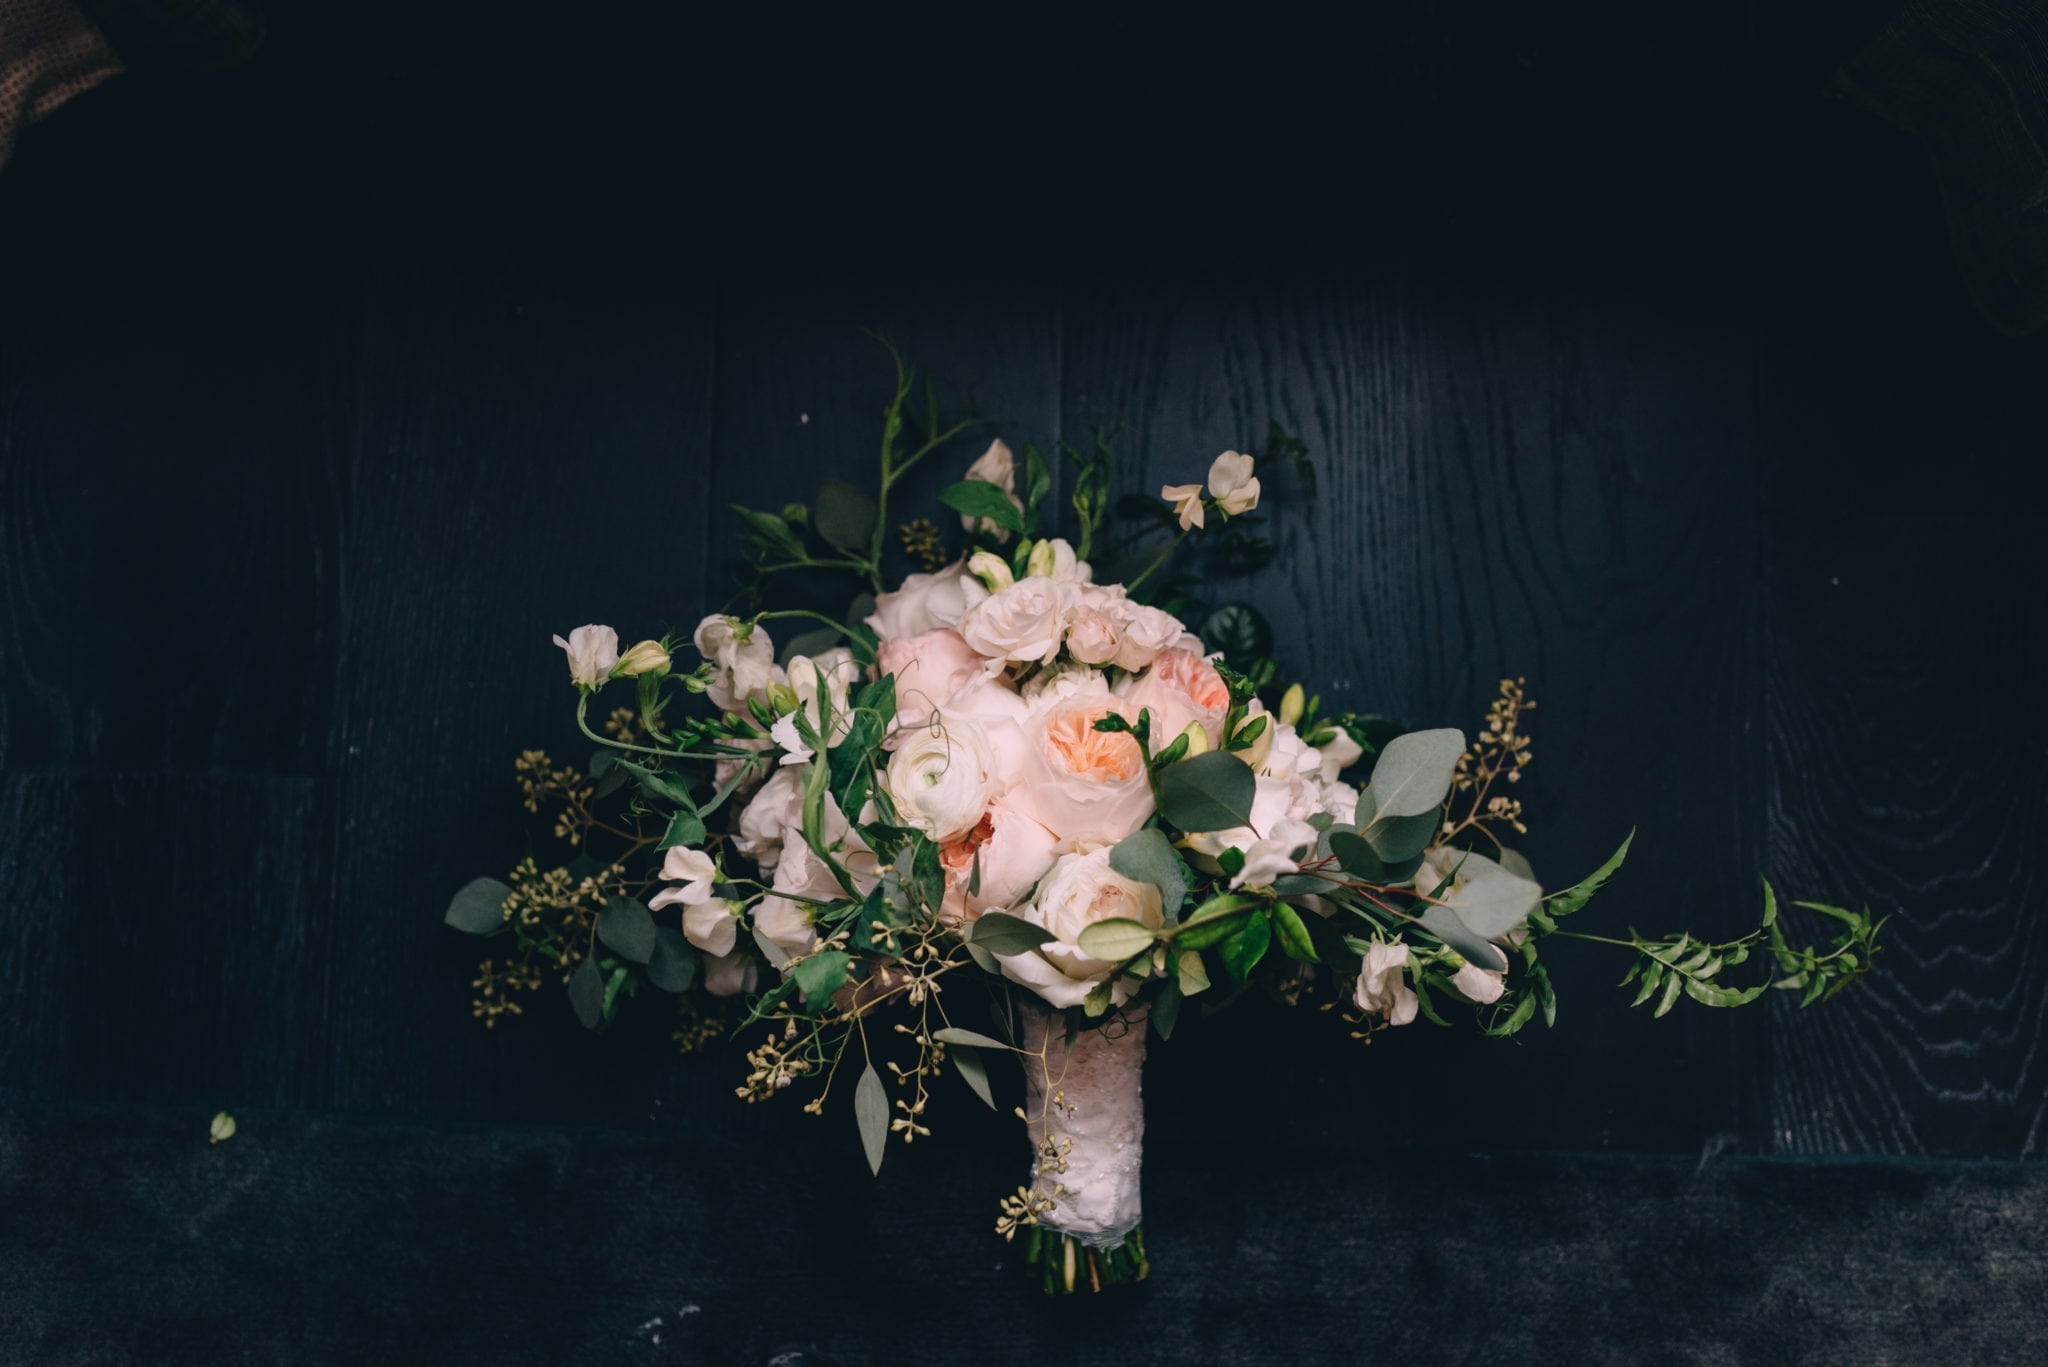 kim-starr-wise-bridal-bouquet-garden-roses-ranunculus-ivory-peachy-pink-blush-spray-roses